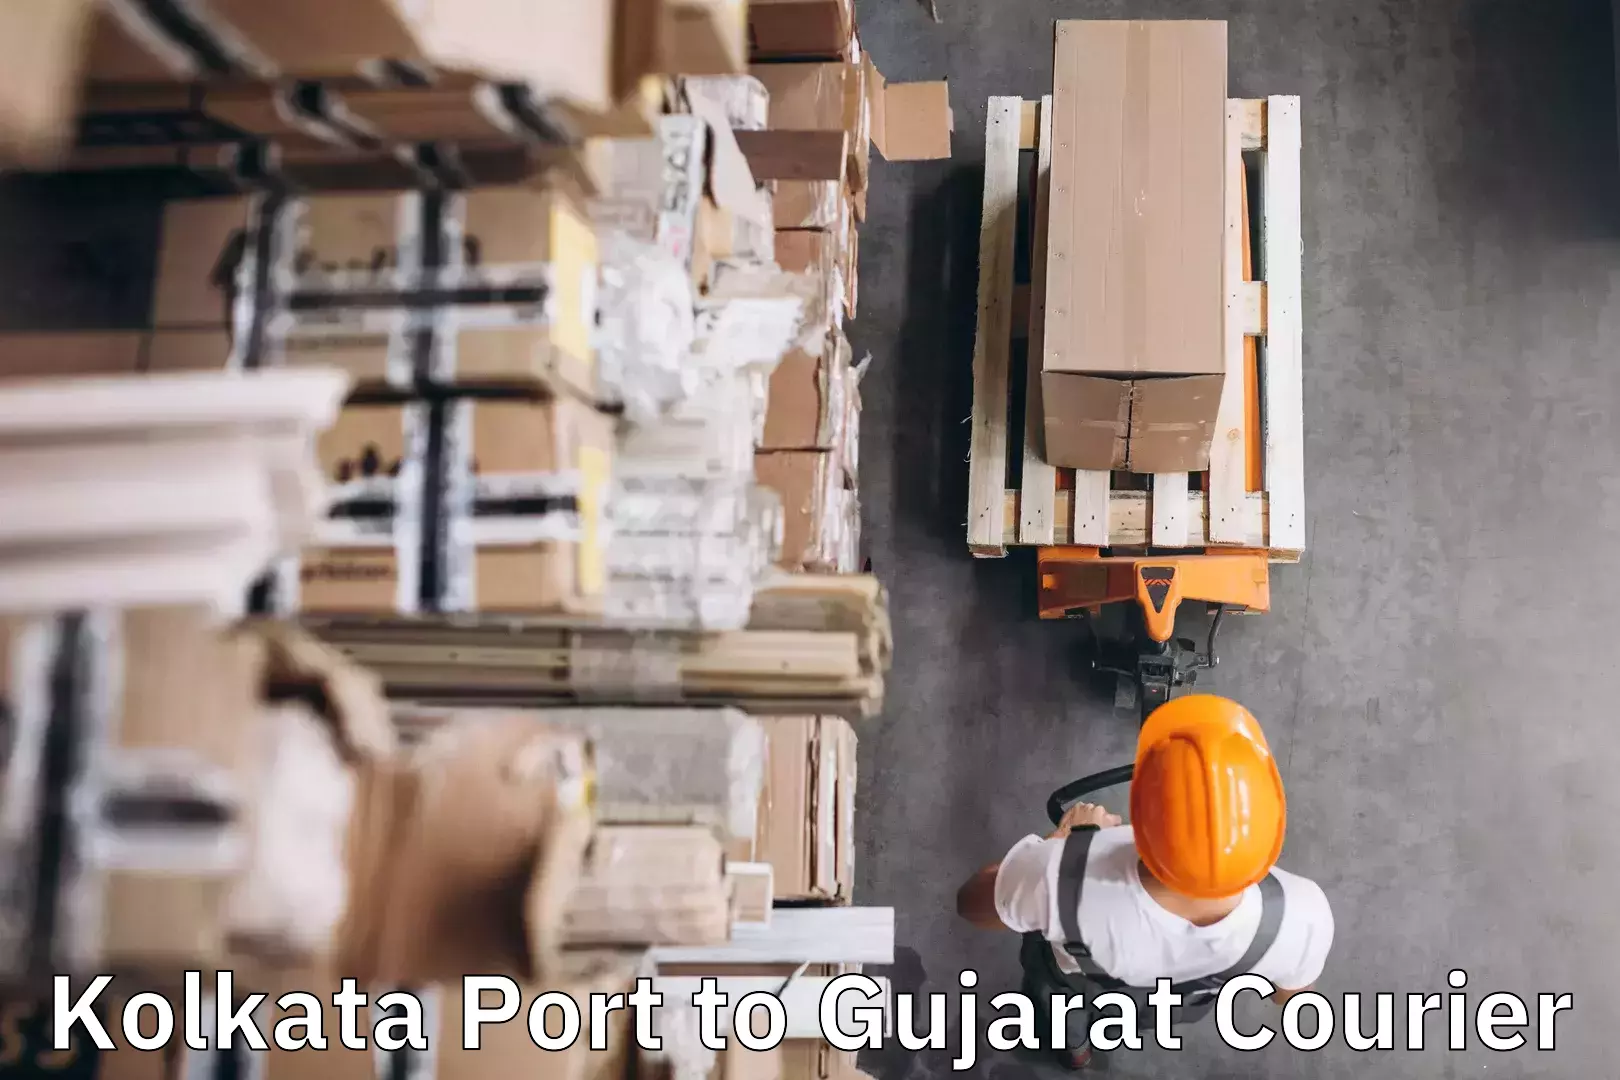 Luggage transport consulting in Kolkata Port to Gujarat